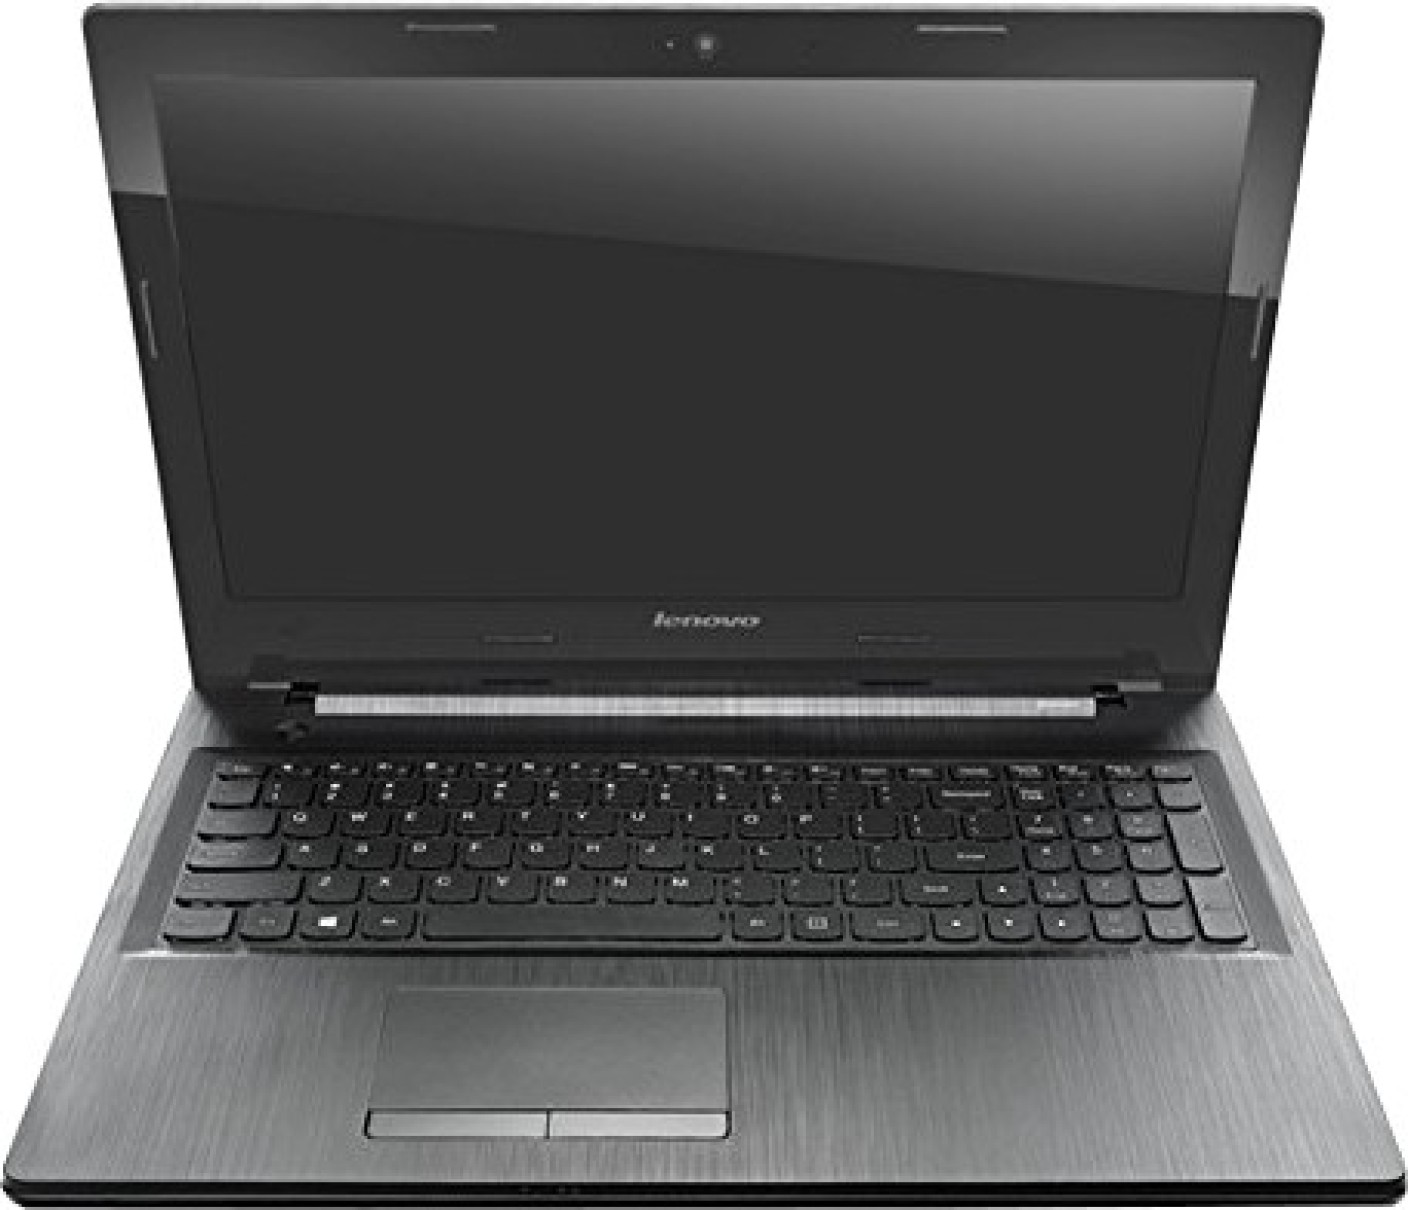 Lenovo G50 70 Notebook0